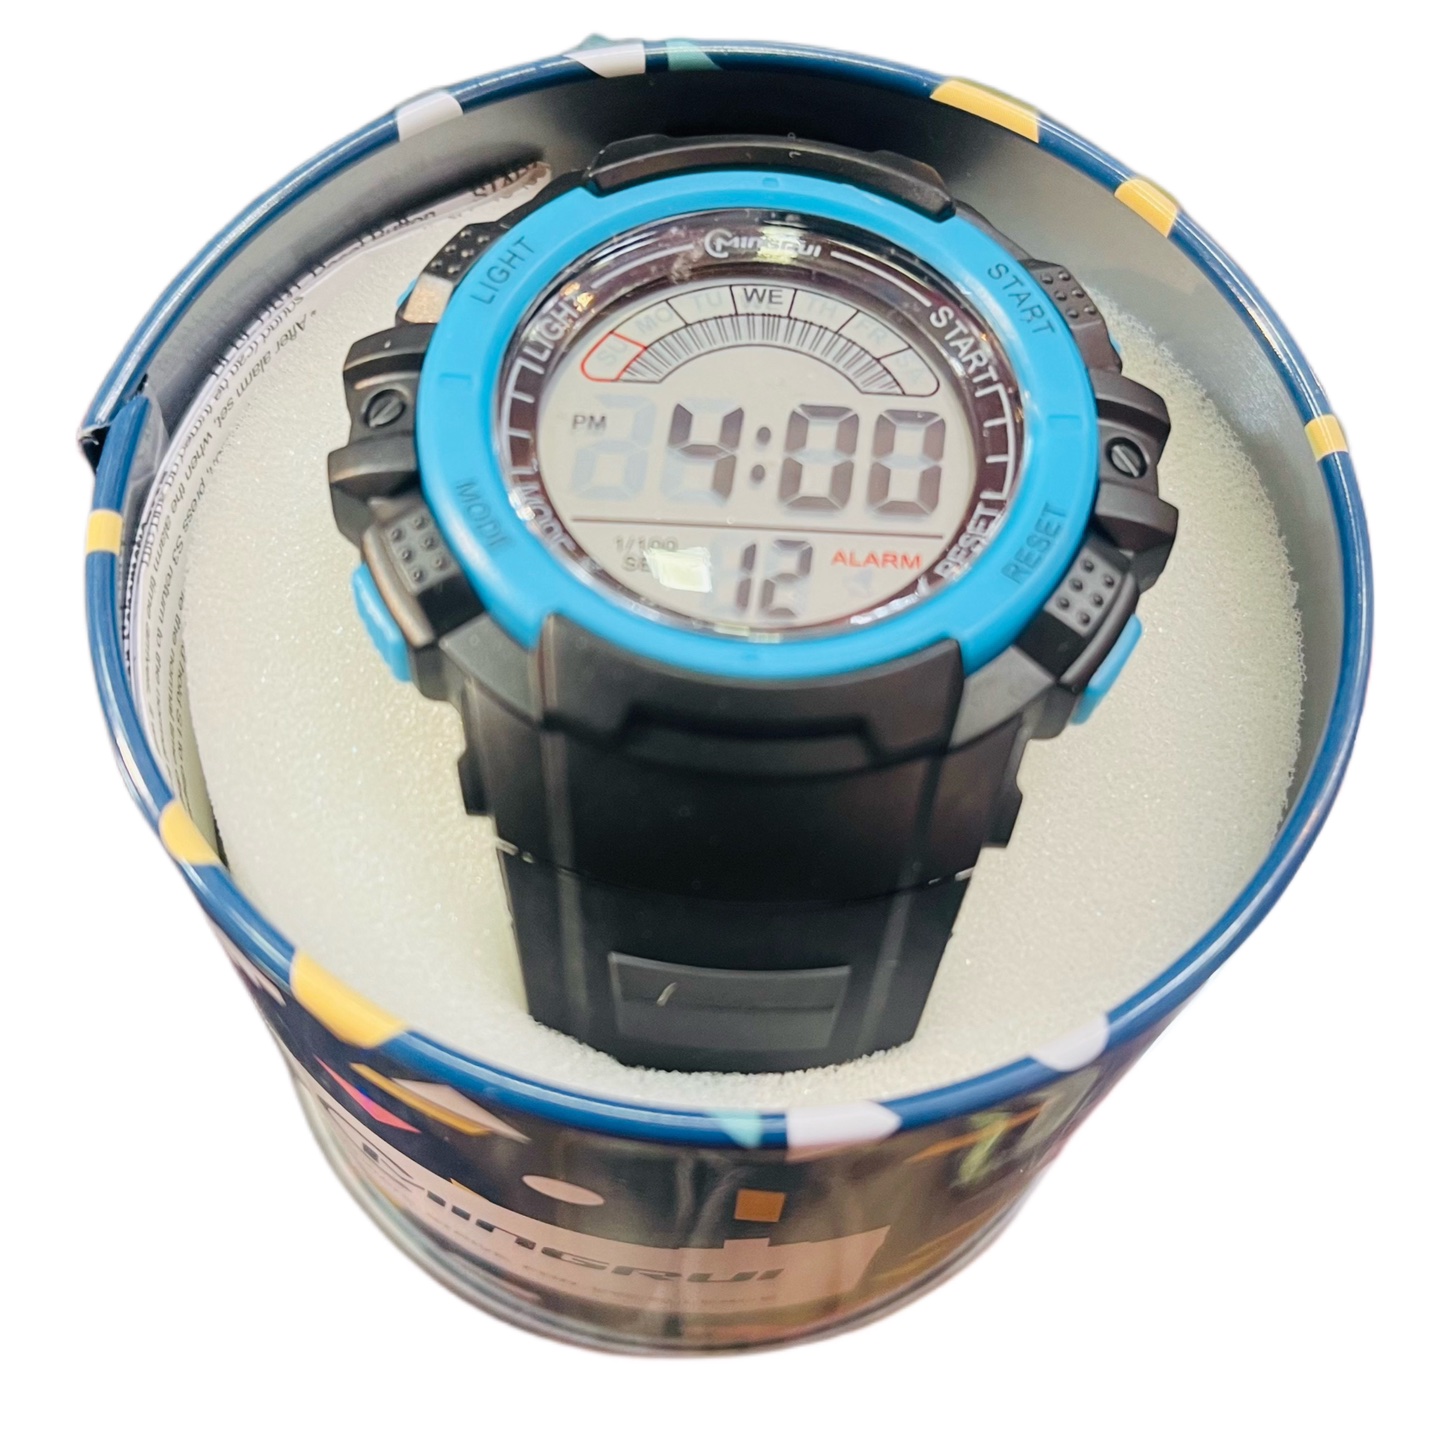 Digital Sport Watch MINGRUI Alarm Chronograph Light NWOT New Battery | eBay